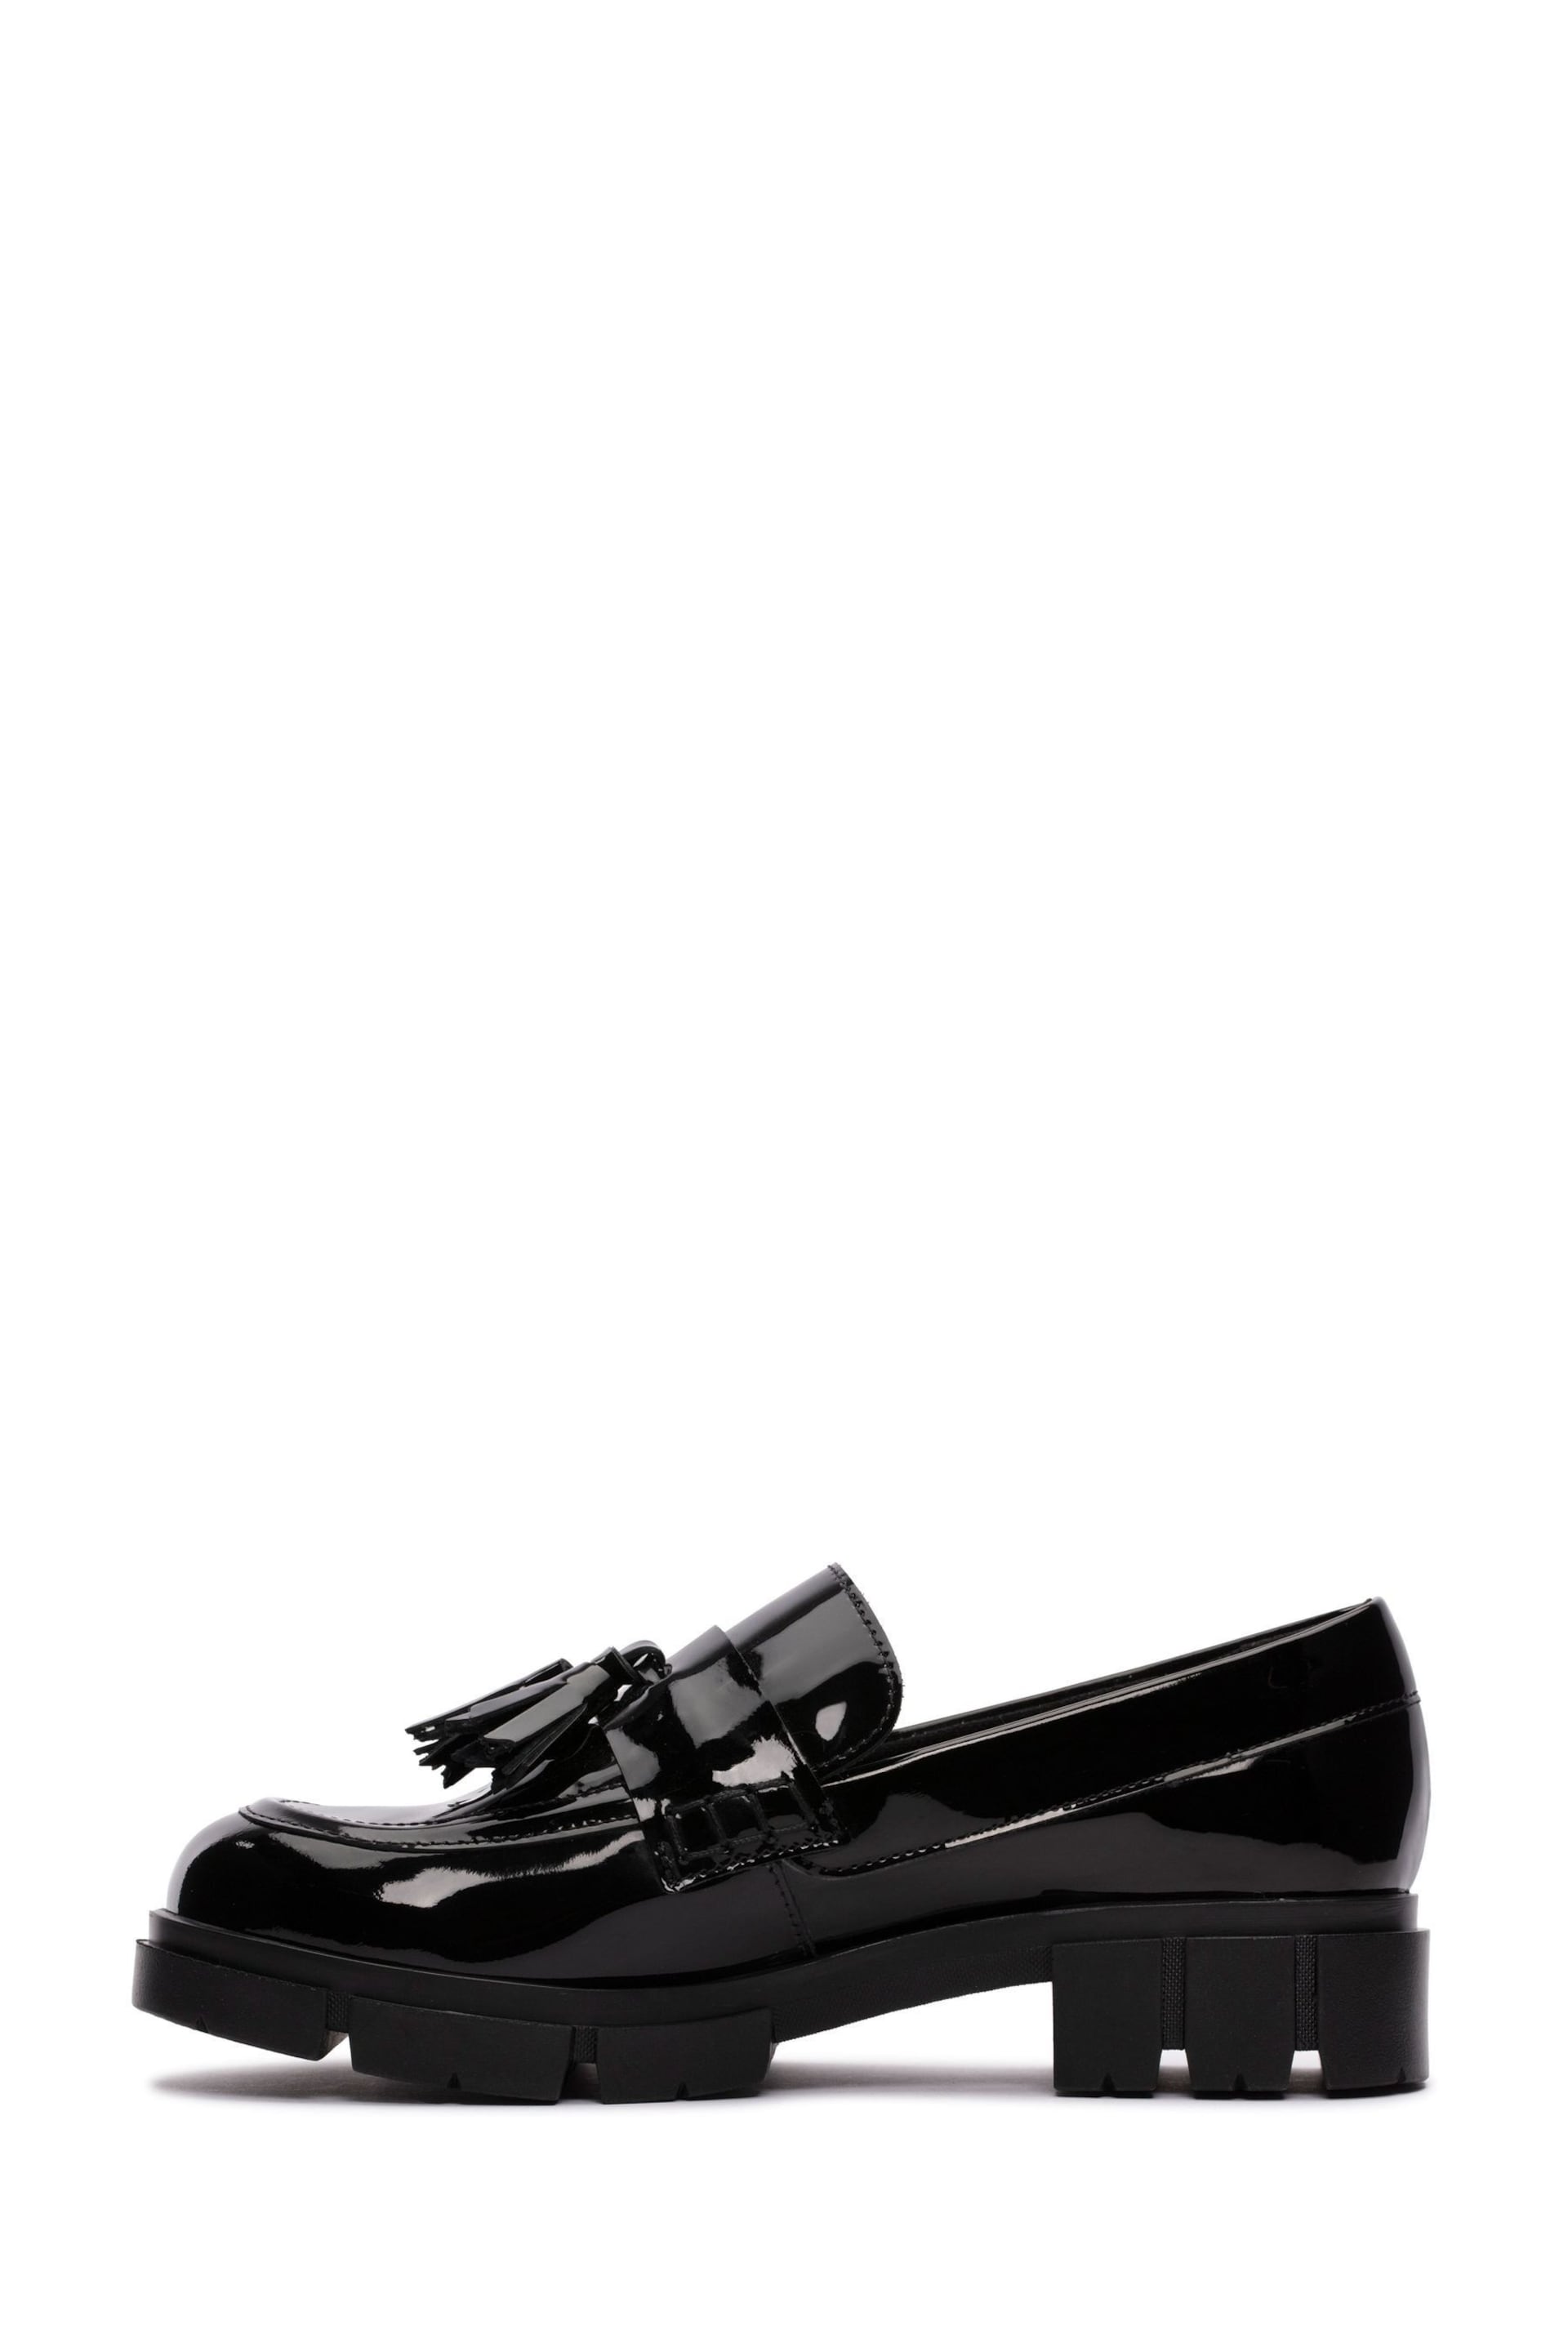 Clarks Black Patent Teala Loafer Shoes - Image 2 of 7